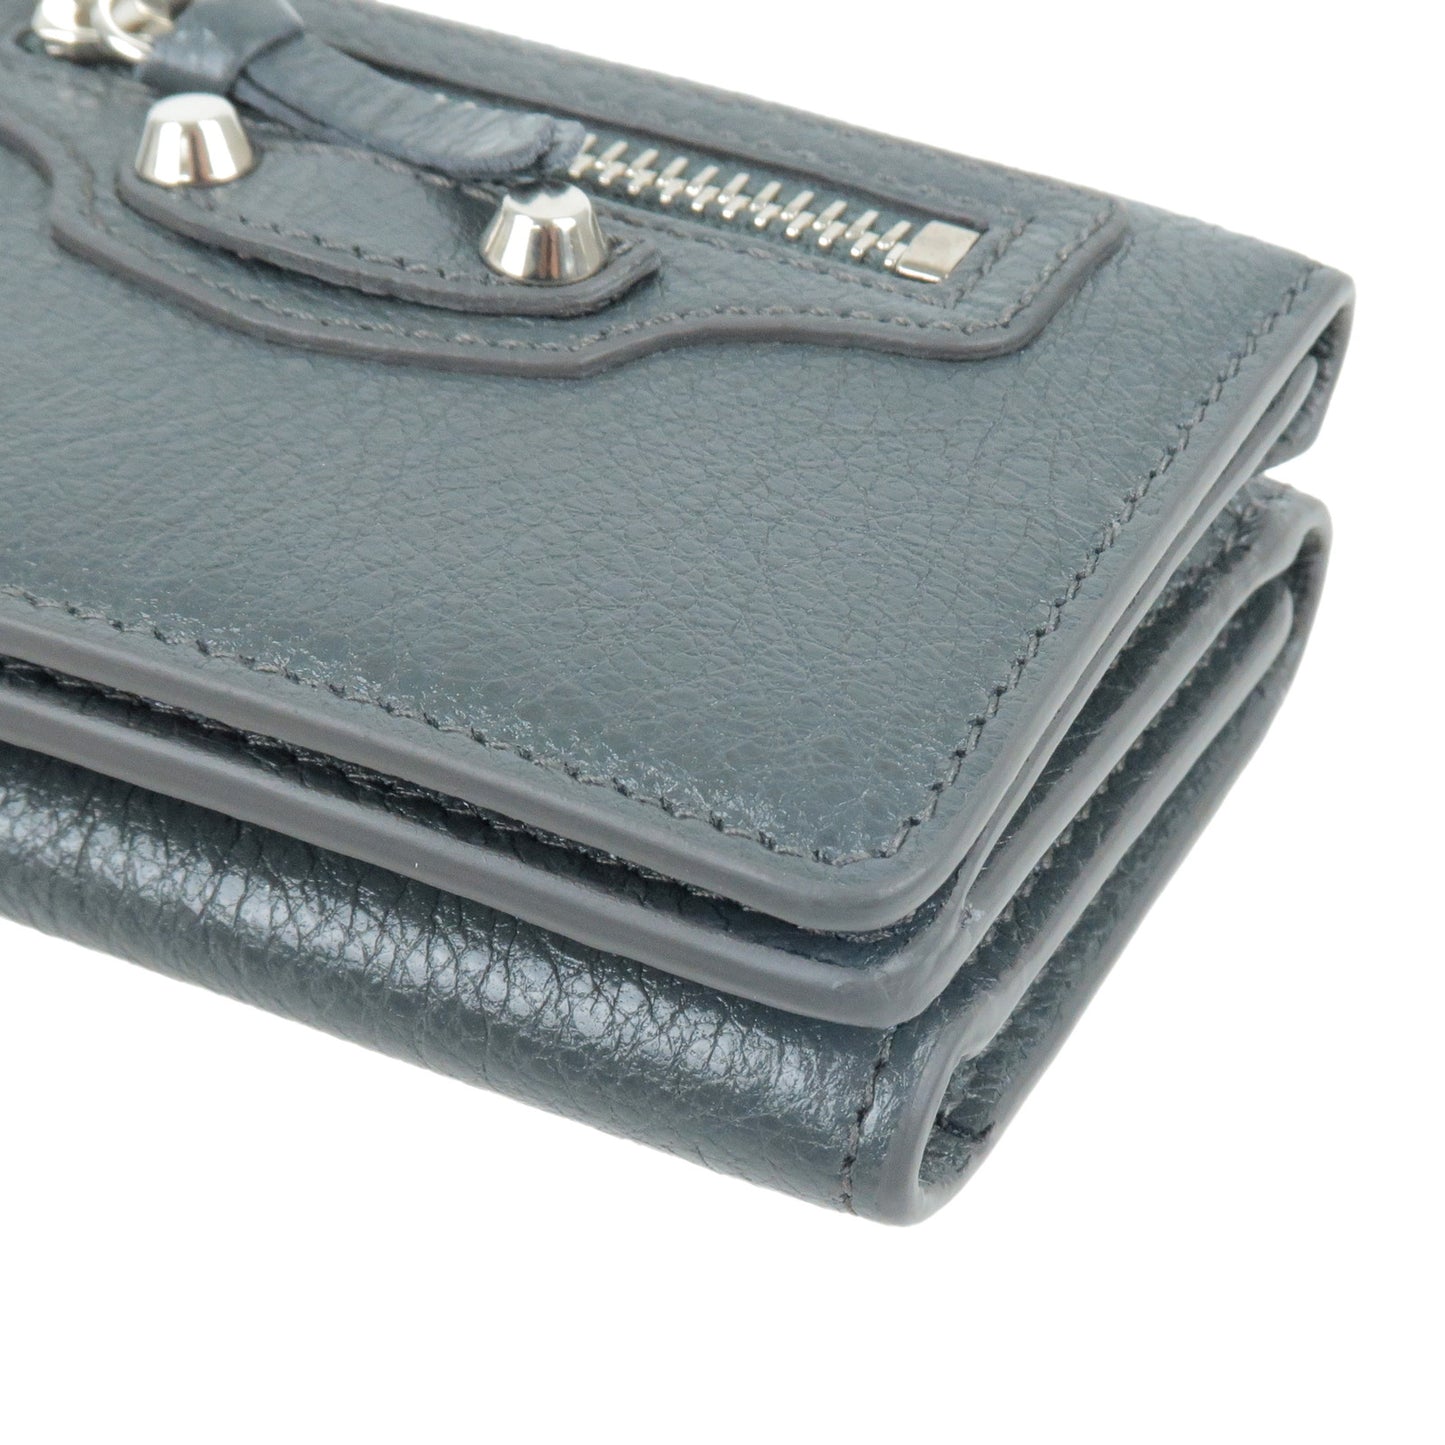 BALENCIAGA Leather Classic Mini Tri-Fold Wallet Gray 477455